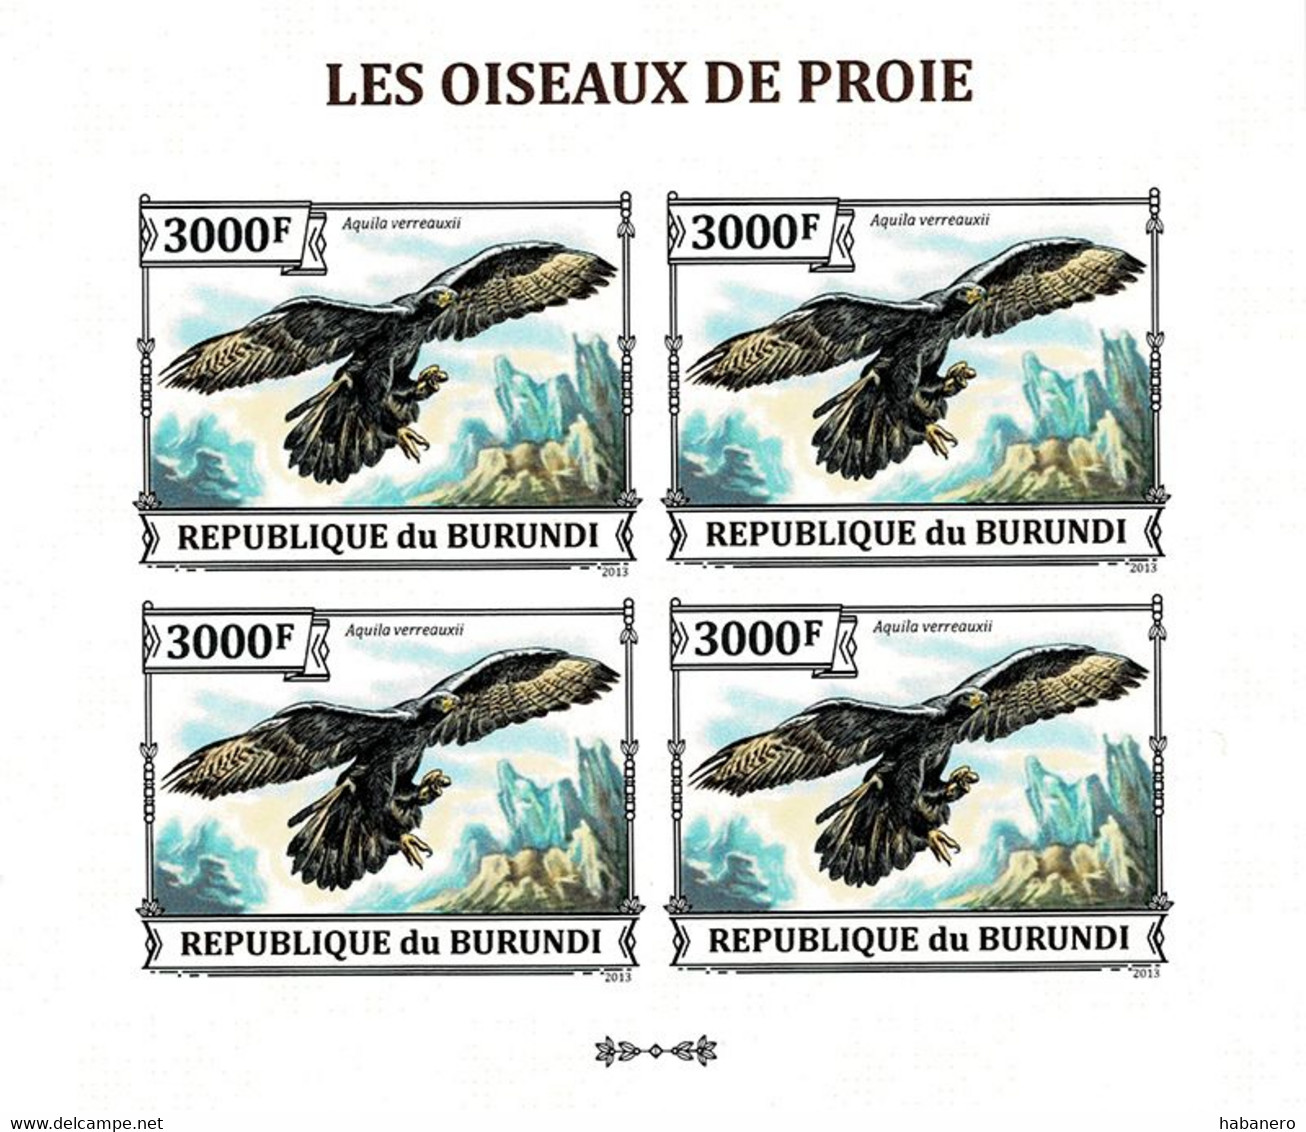 BURUNDI 2013 Mi 3245B KLB BIRDS OF PREY VERREAUX'S EAGLE MINT IMPERFORATED MINIATURE SHEET ** - Blocks & Sheetlets